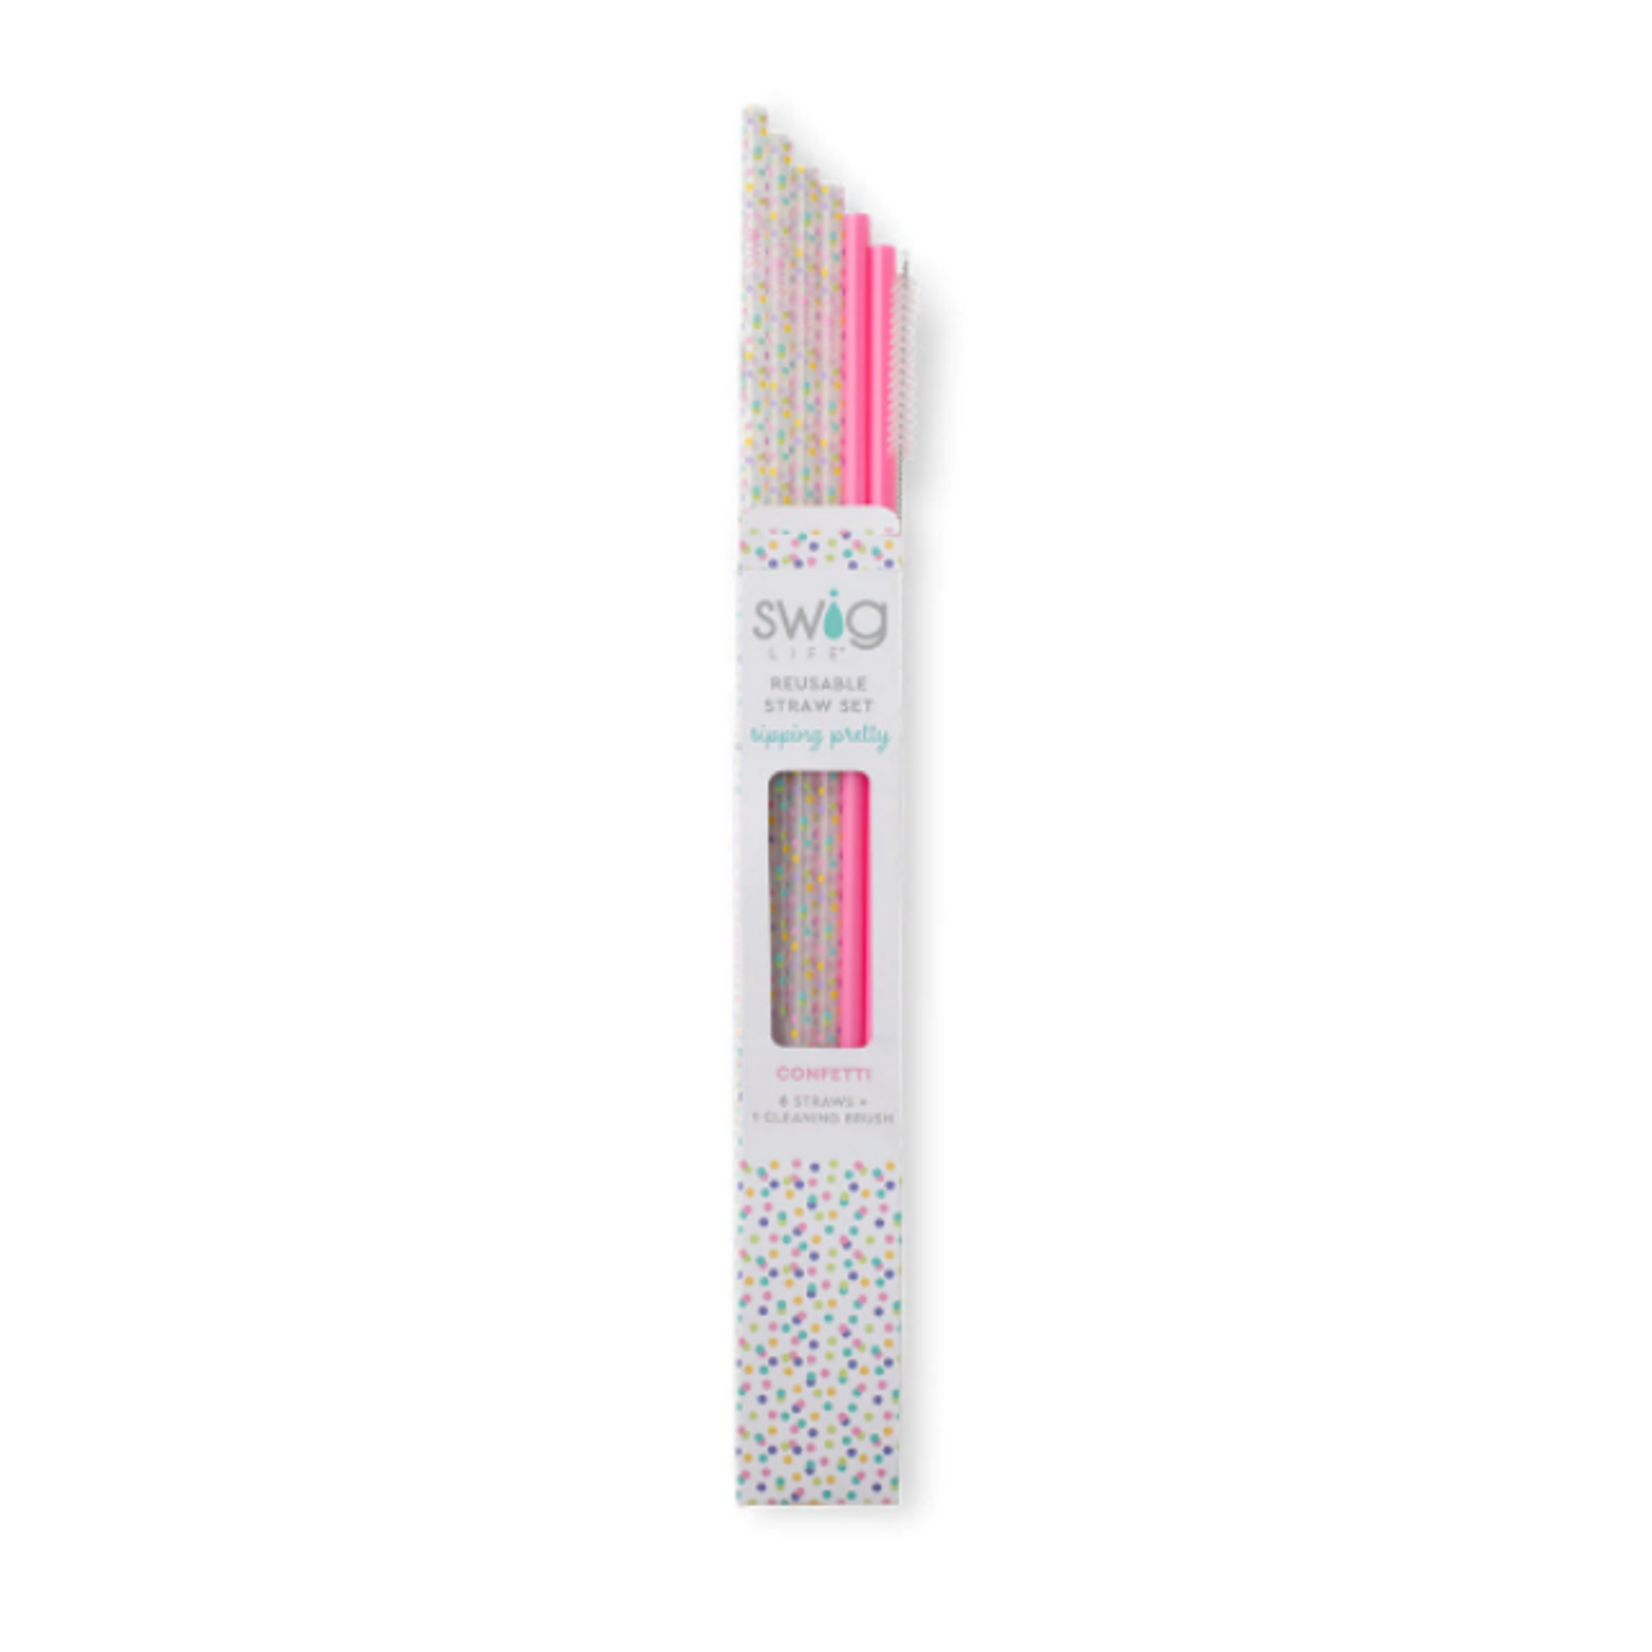 Swig Swig Confetti & Pink Reusable Straw Set